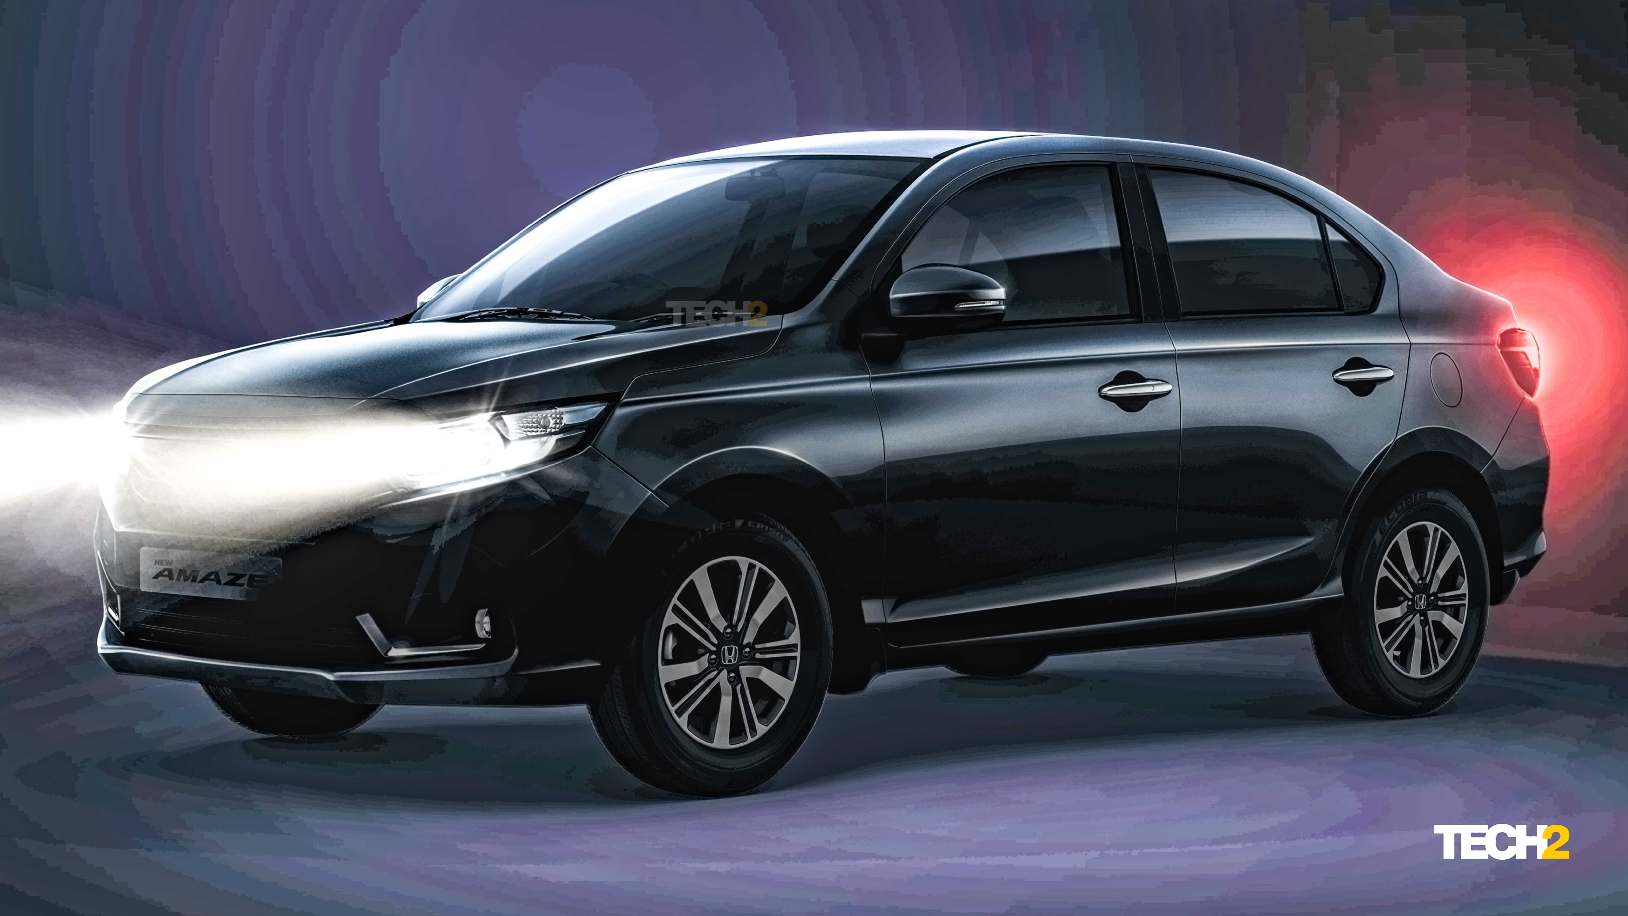 The Honda Amaze facelift will pack LED projector headlights and new alloy wheels. Image: Honda